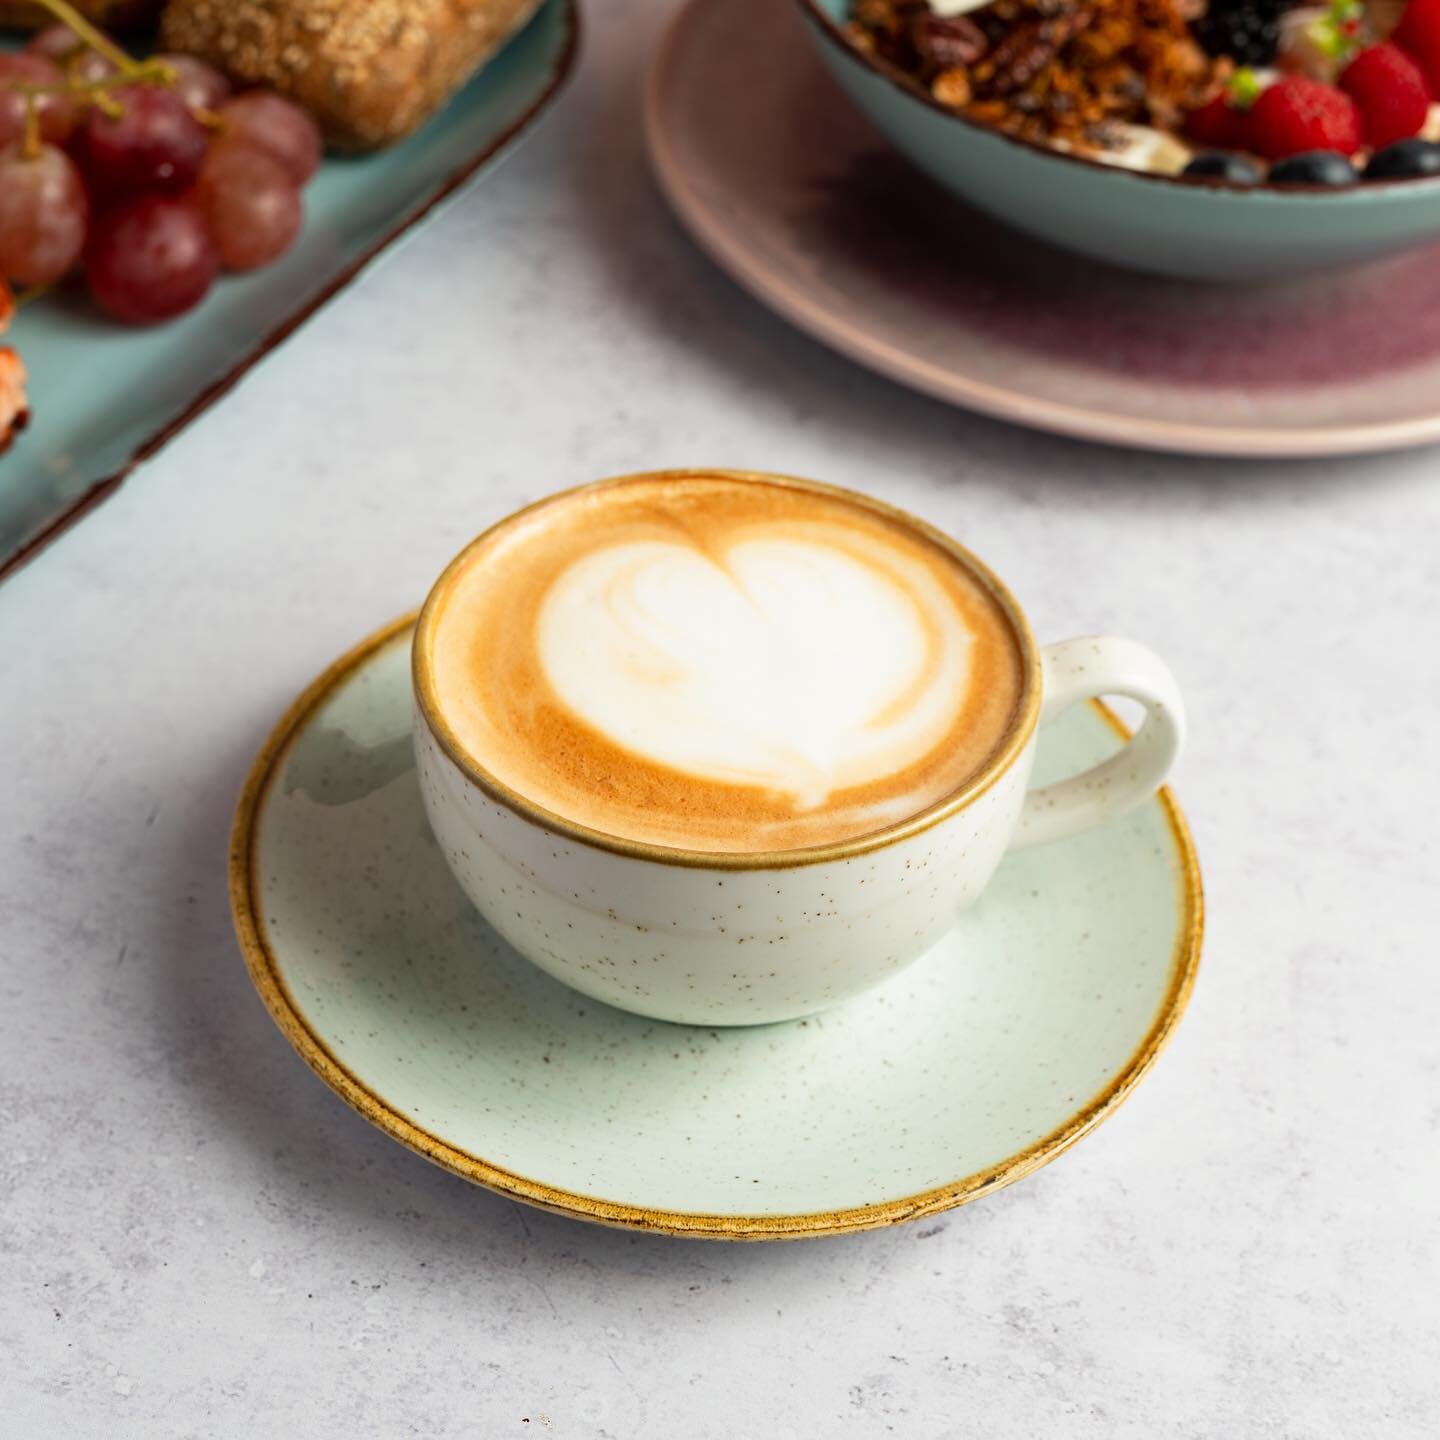 It&rsquo;s coffee o&rsquo;clock 😌☕️
.
.
.
#breakfast #fr&uuml;hst&uuml;ck #br&ouml;tchen #brunch #breakfasttime #coffeetime #coffee #latte #latteart ##latt&eacute; #leipzig #leipzigcity #leipzigtogo #leipzigcafe